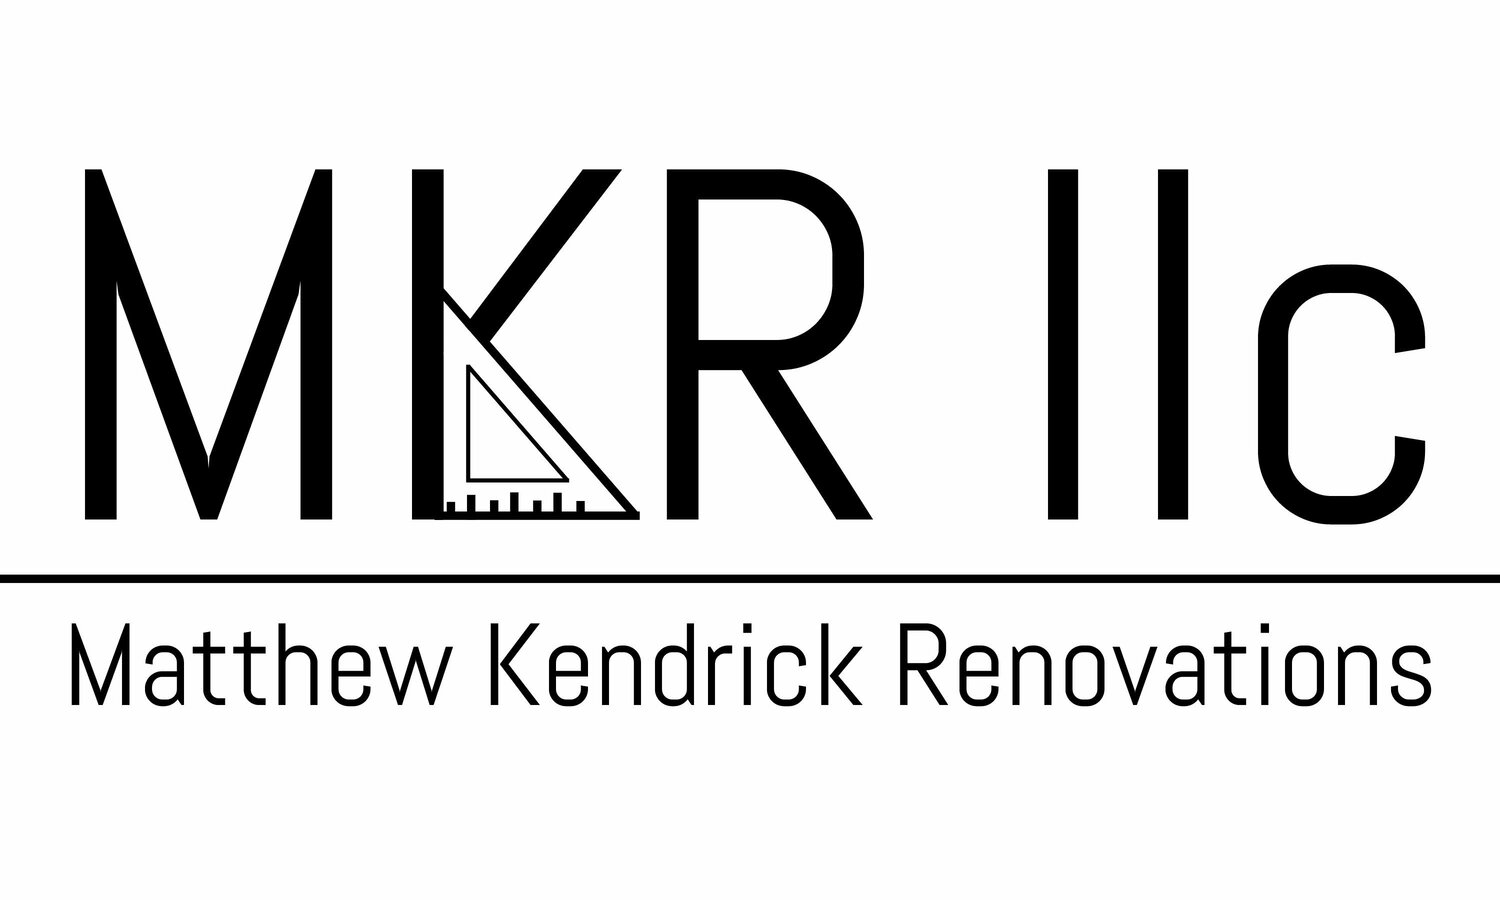 Matthew Kendrick Renovations